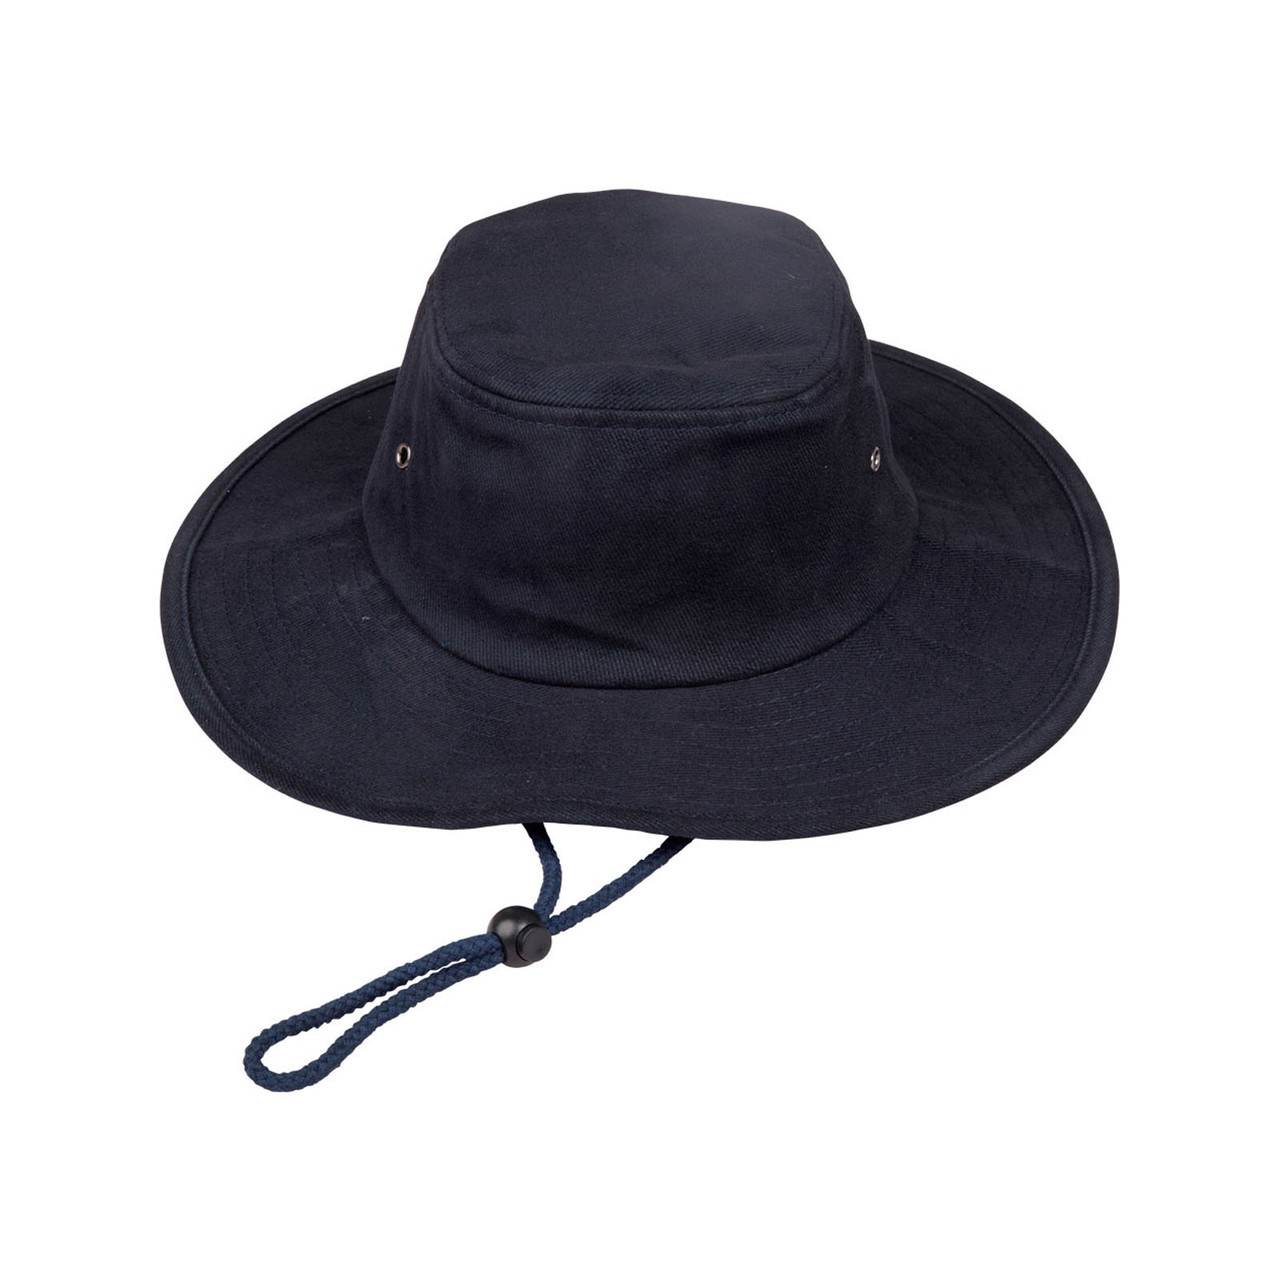 Shop Brushed Cotton Surf Hat | Bulk Buy Summer Plain Hats Online